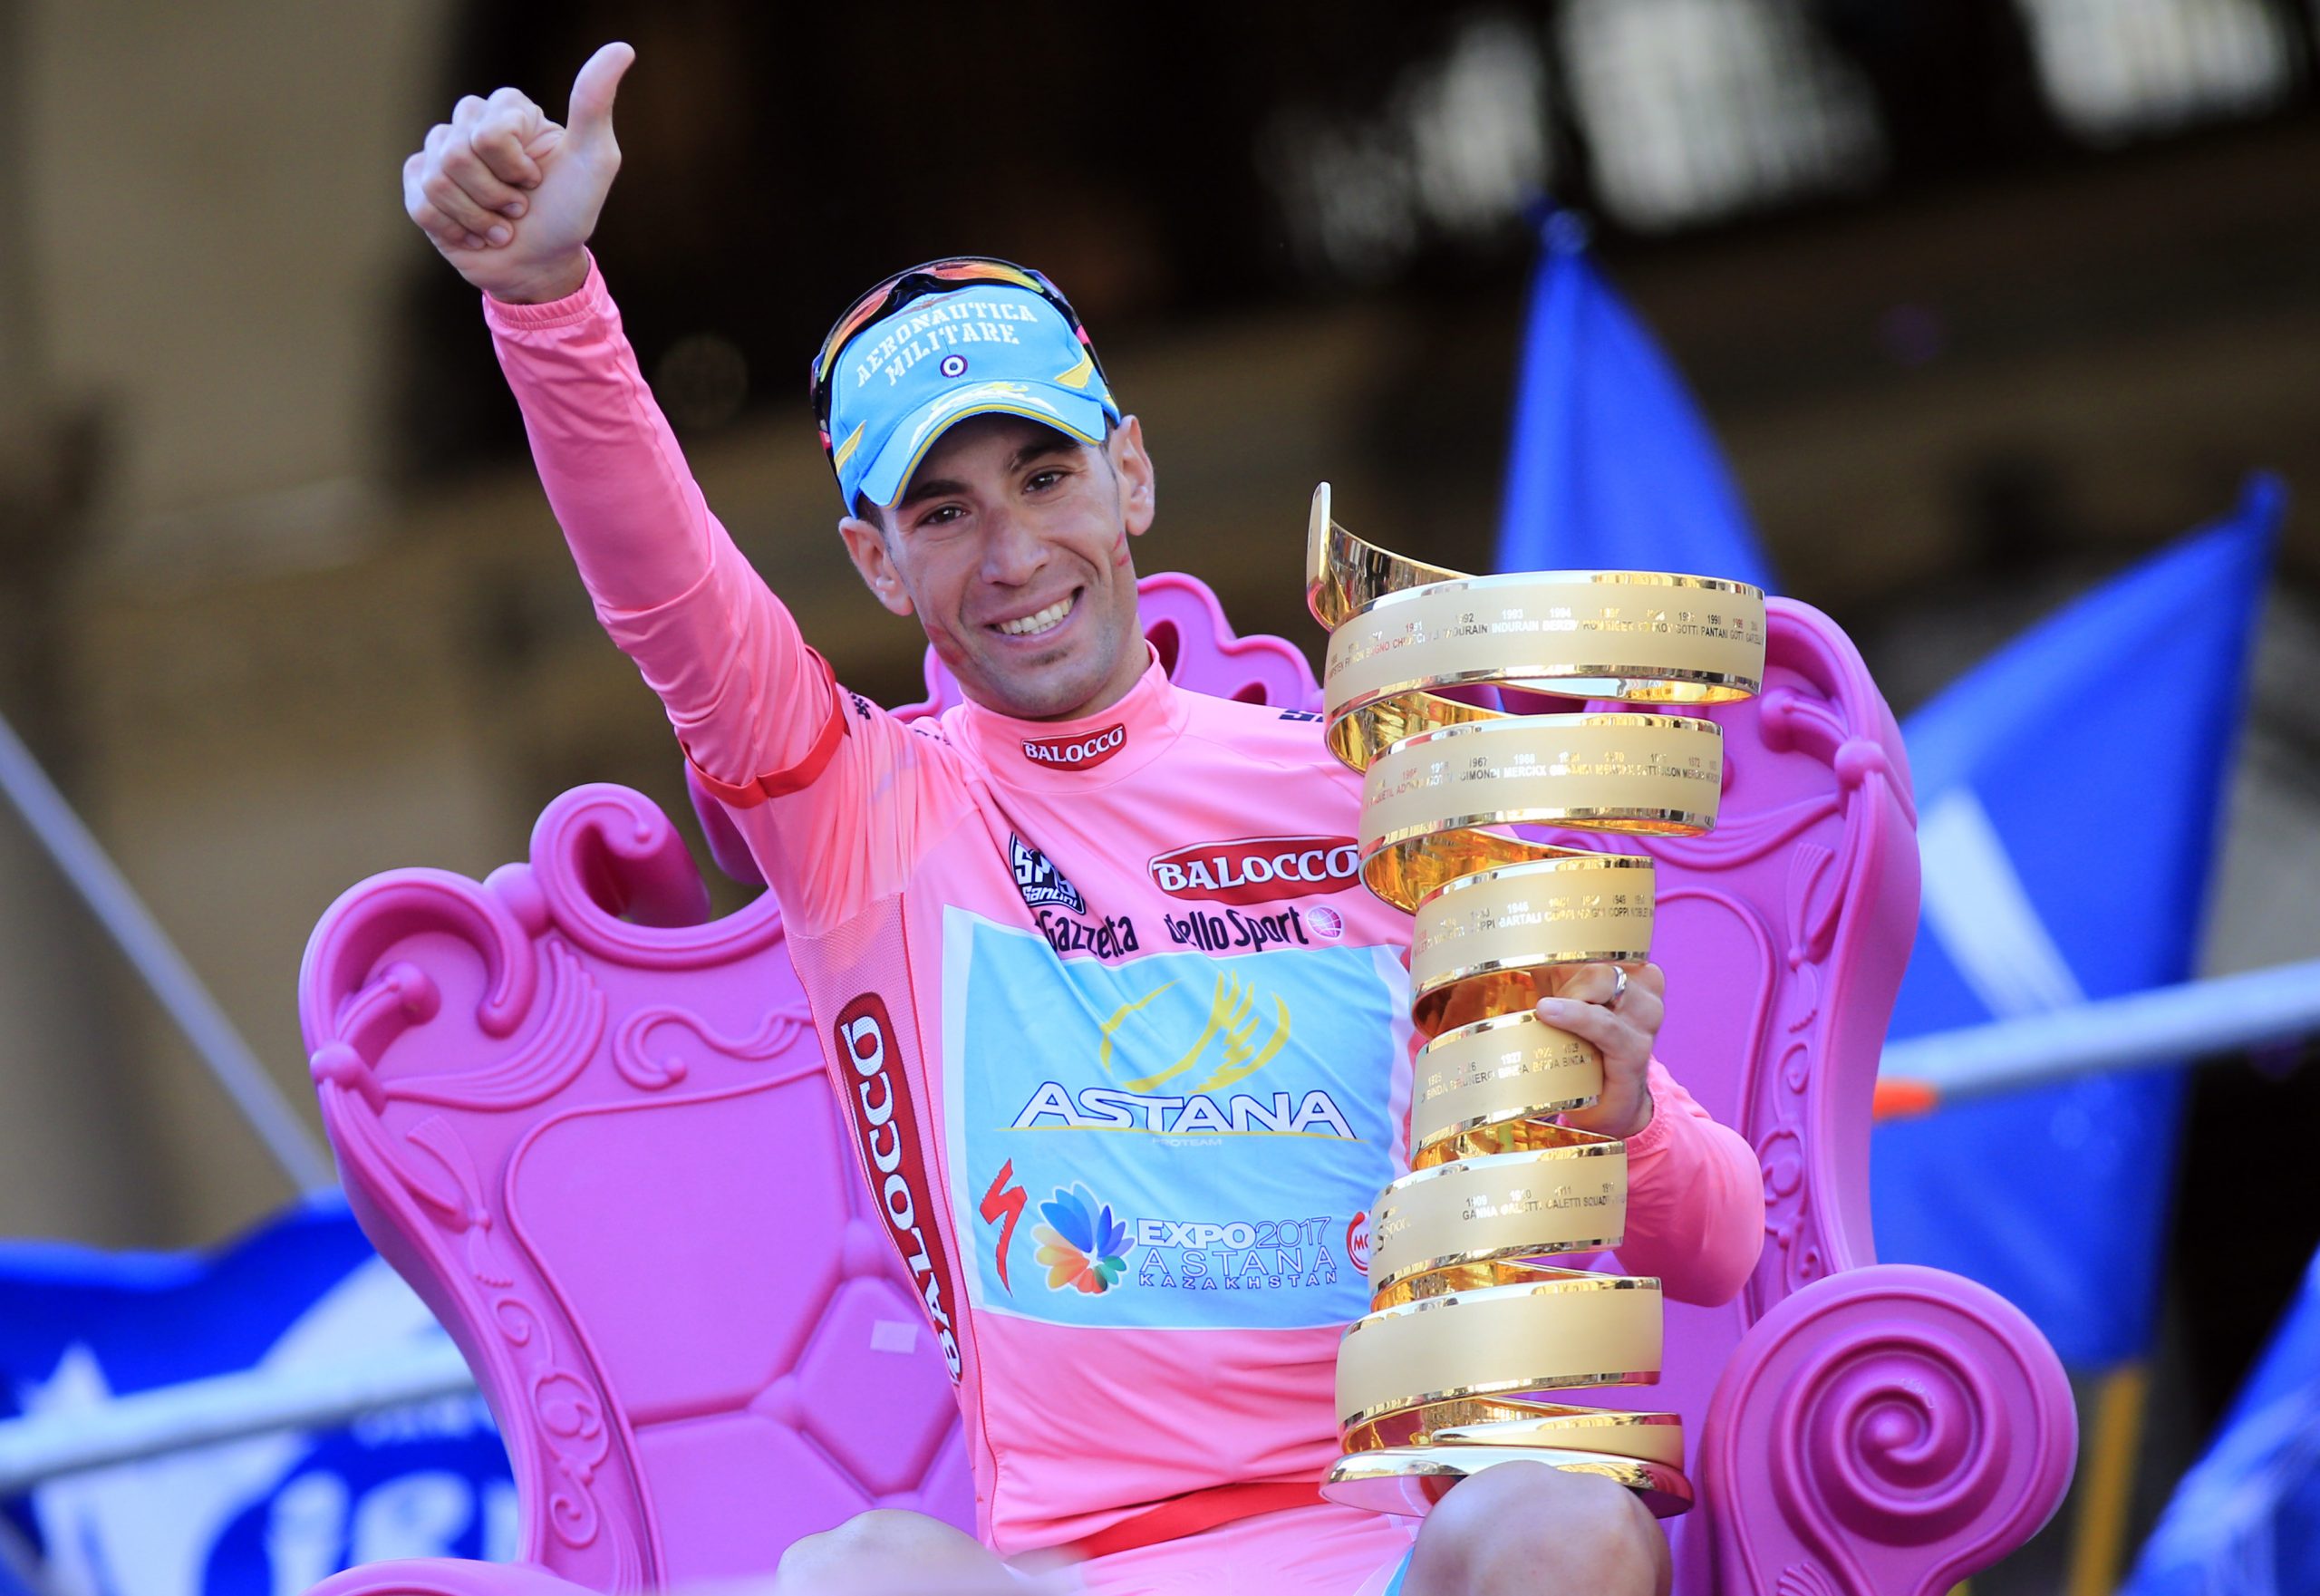 Giro d’Italia 2013 – NIBALI